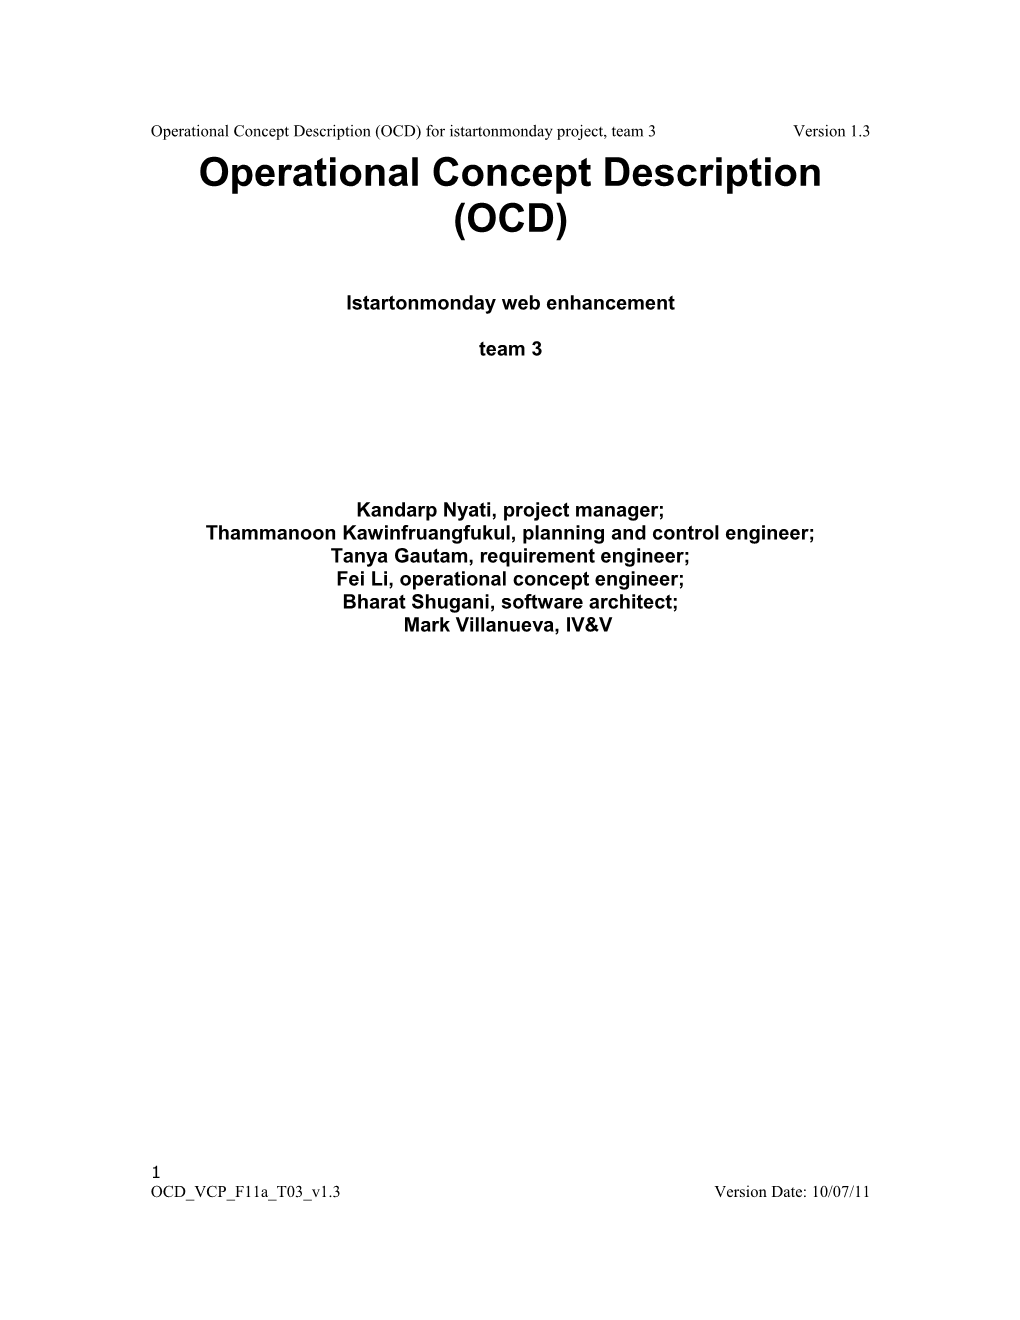 Operational Concept Description (OCD) for Istartonmonday Project, Team 3Version 1.3